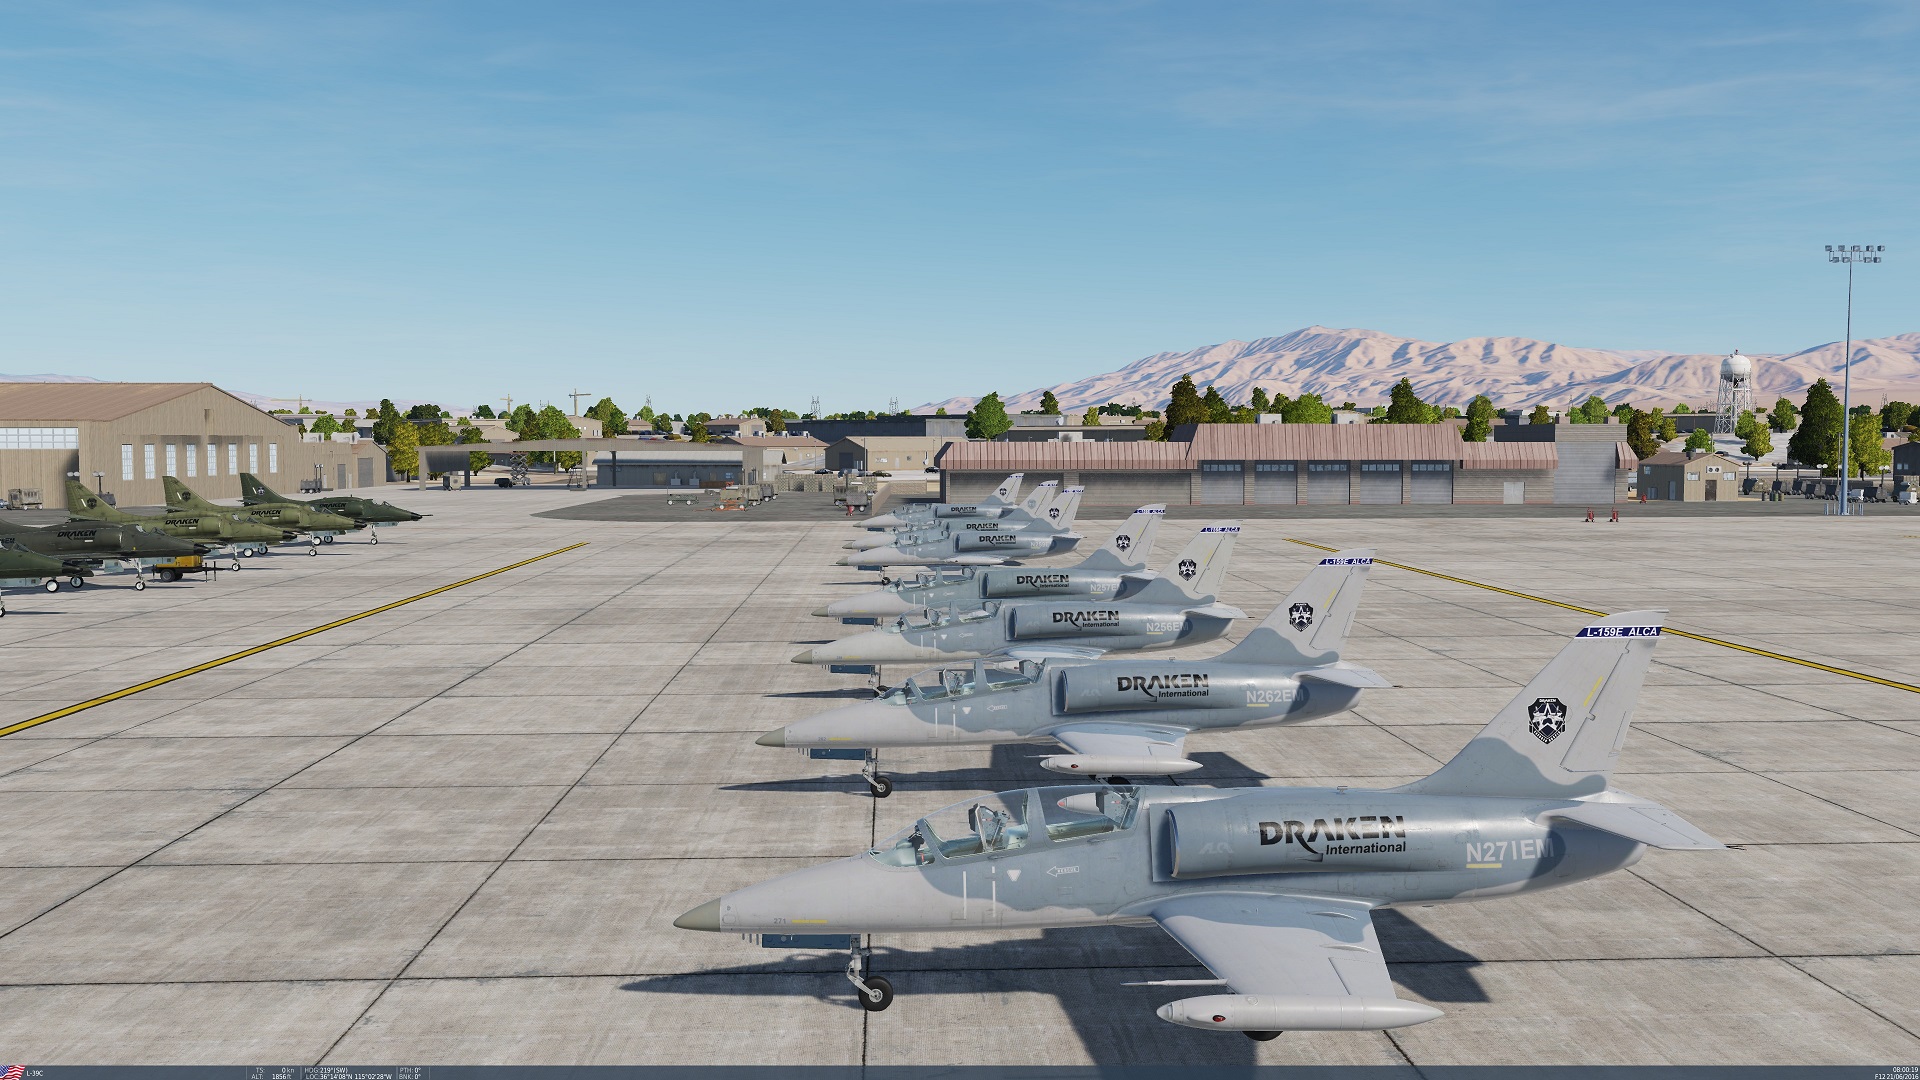 L-39ZA Draken International package